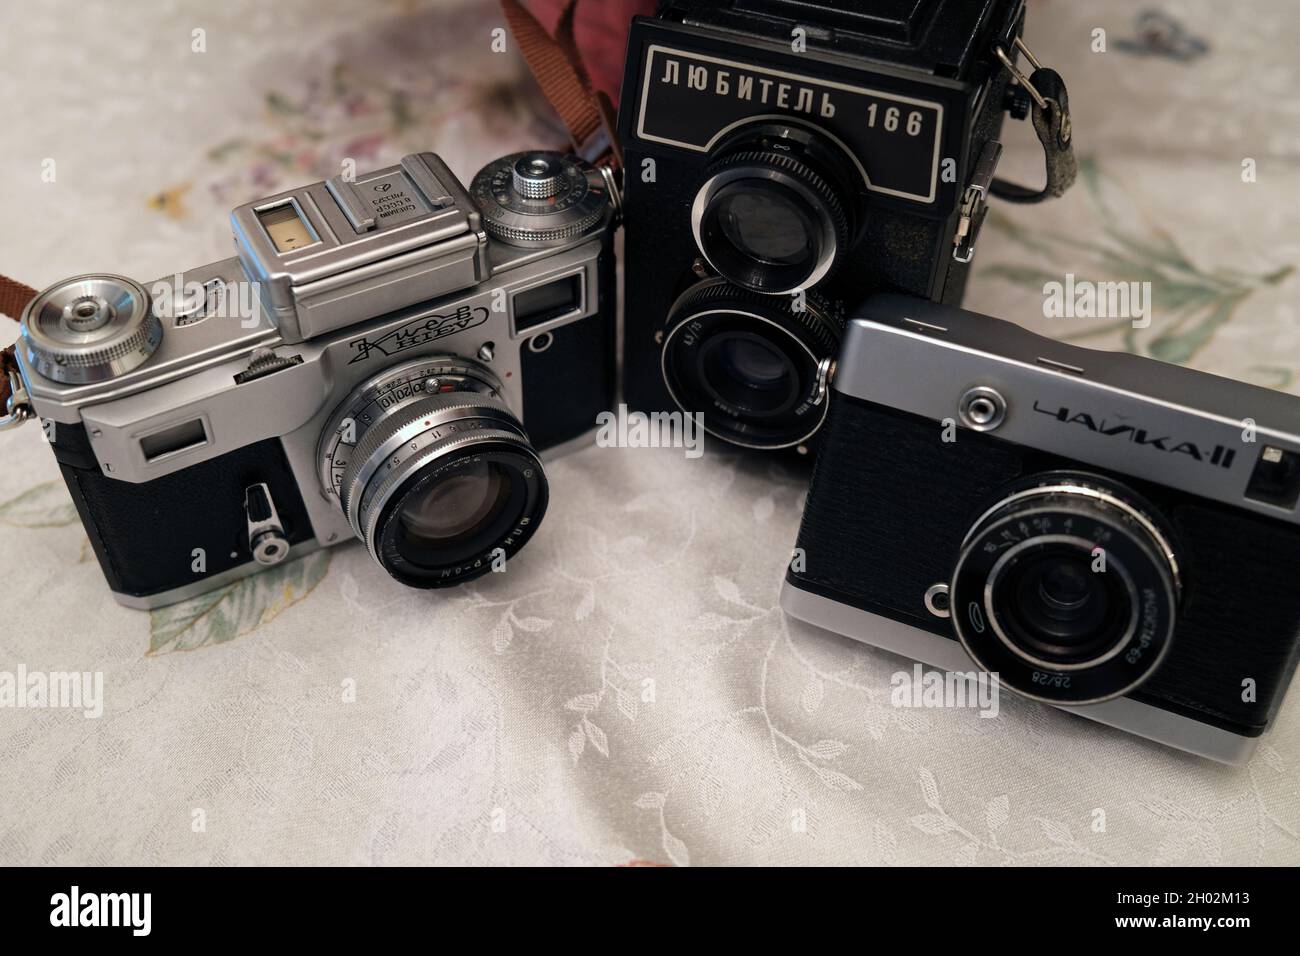 Drei sowjetische Kameras - Chaika 2, Kiew 4 und Lubitel 166 Stockfoto